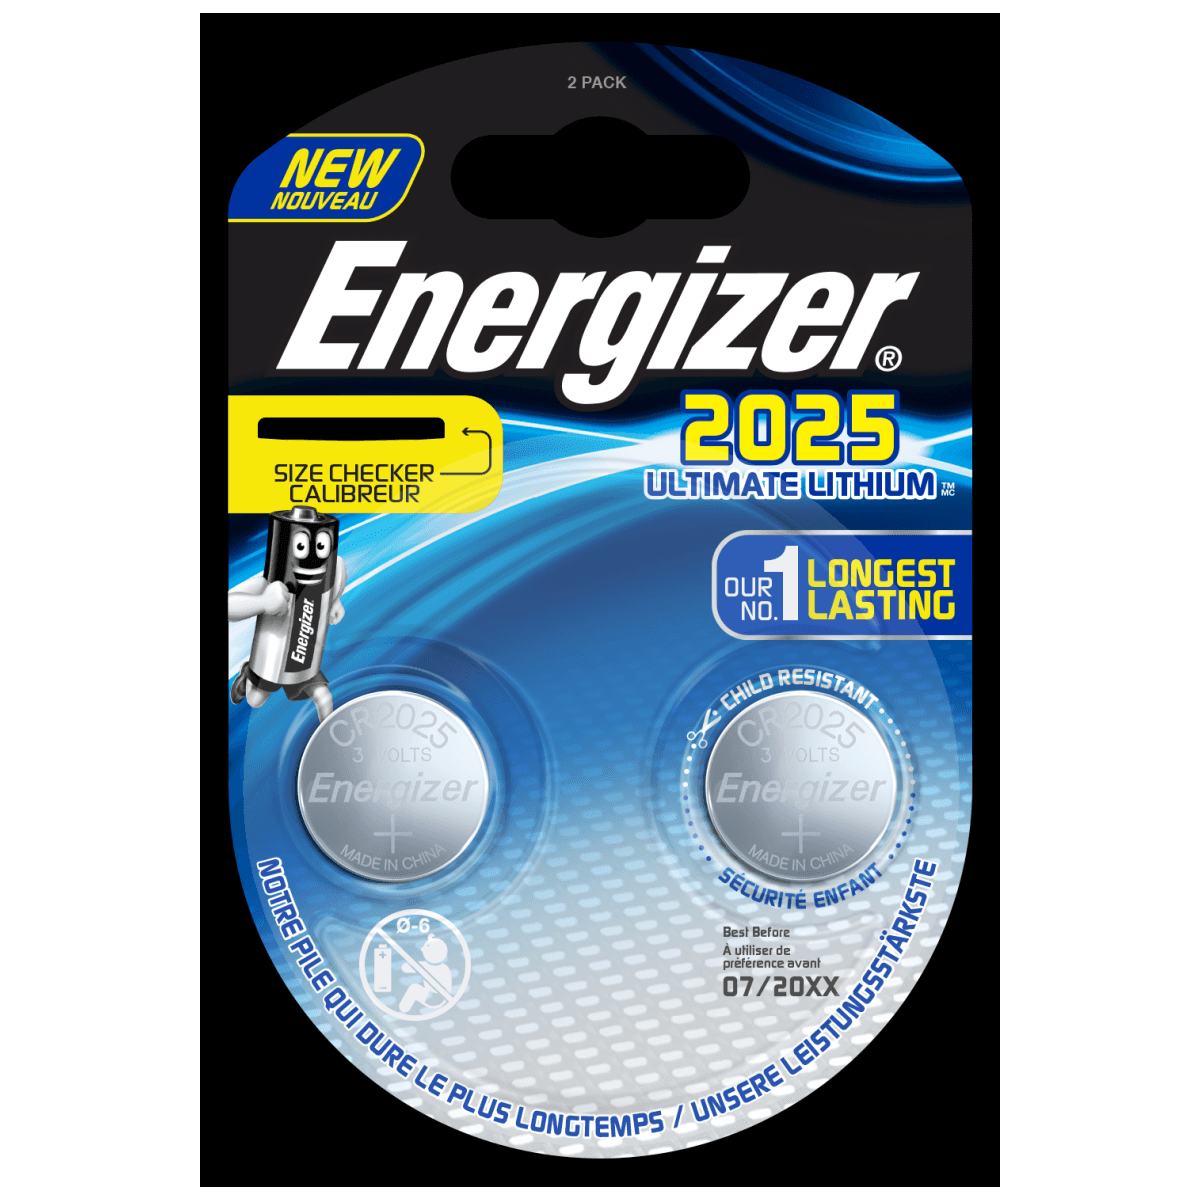 Baterie Energizer Ultimate Lithum CR2025 CR2025 (EN-423013)